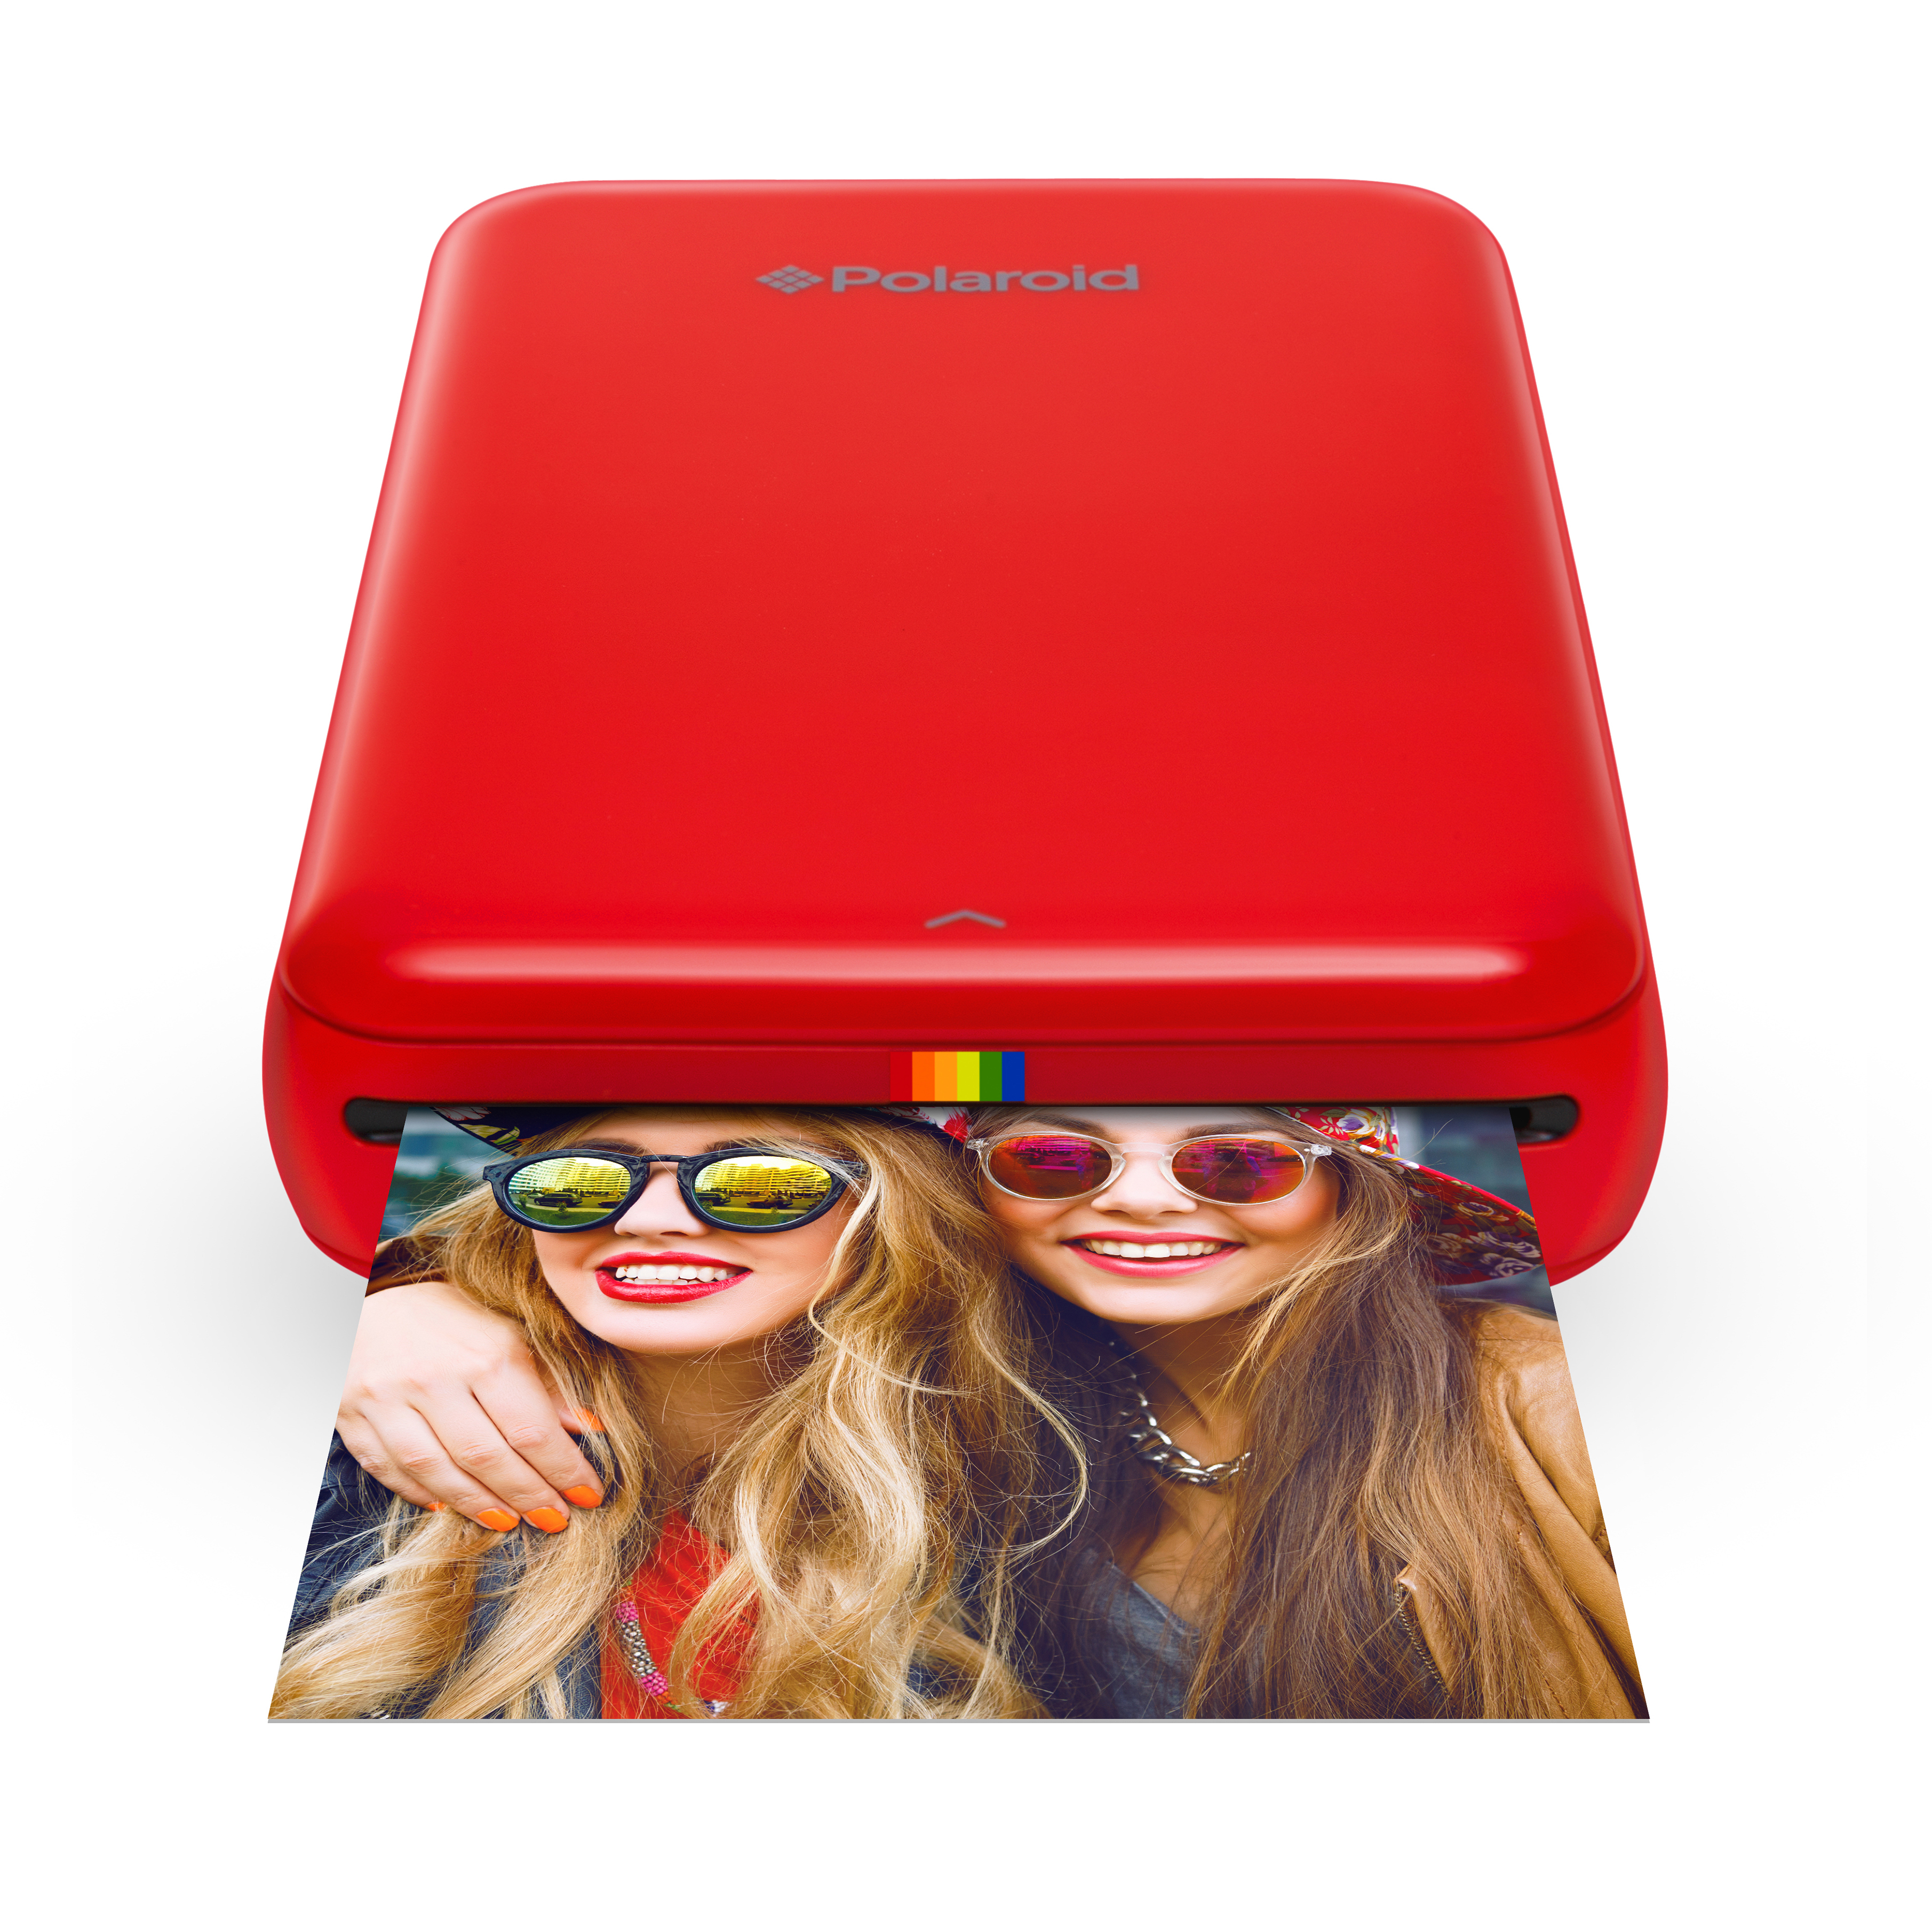 Polaroid Zip Mobile Instant Photo Printer, Red, POLMP01R - image 1 of 7